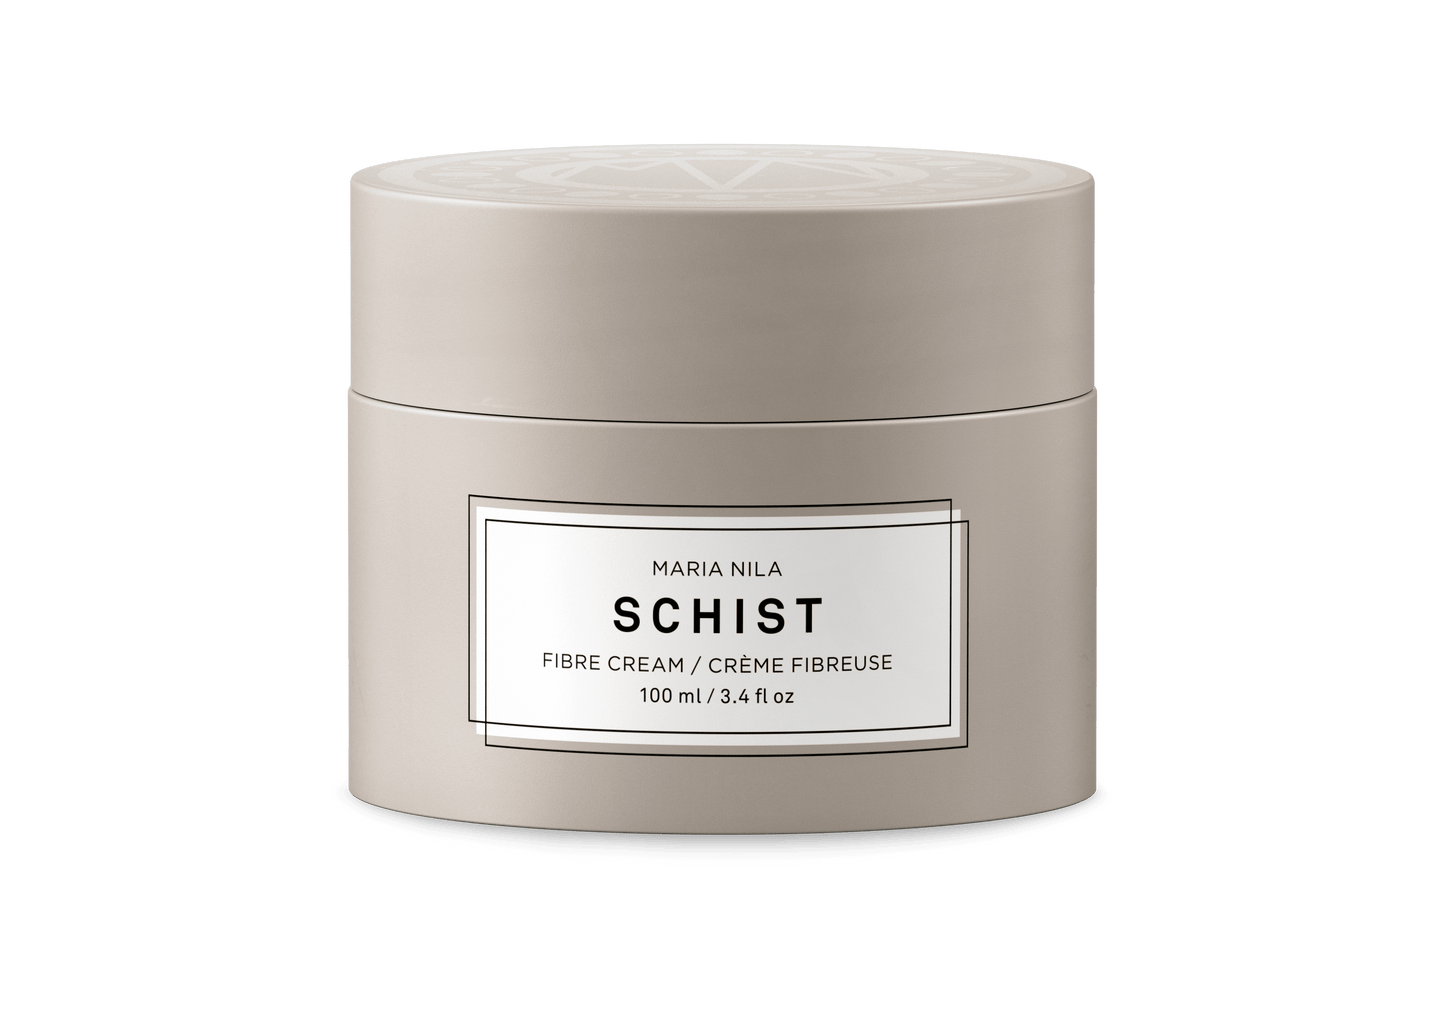 Schist Fibre Cream - The Coloroom 